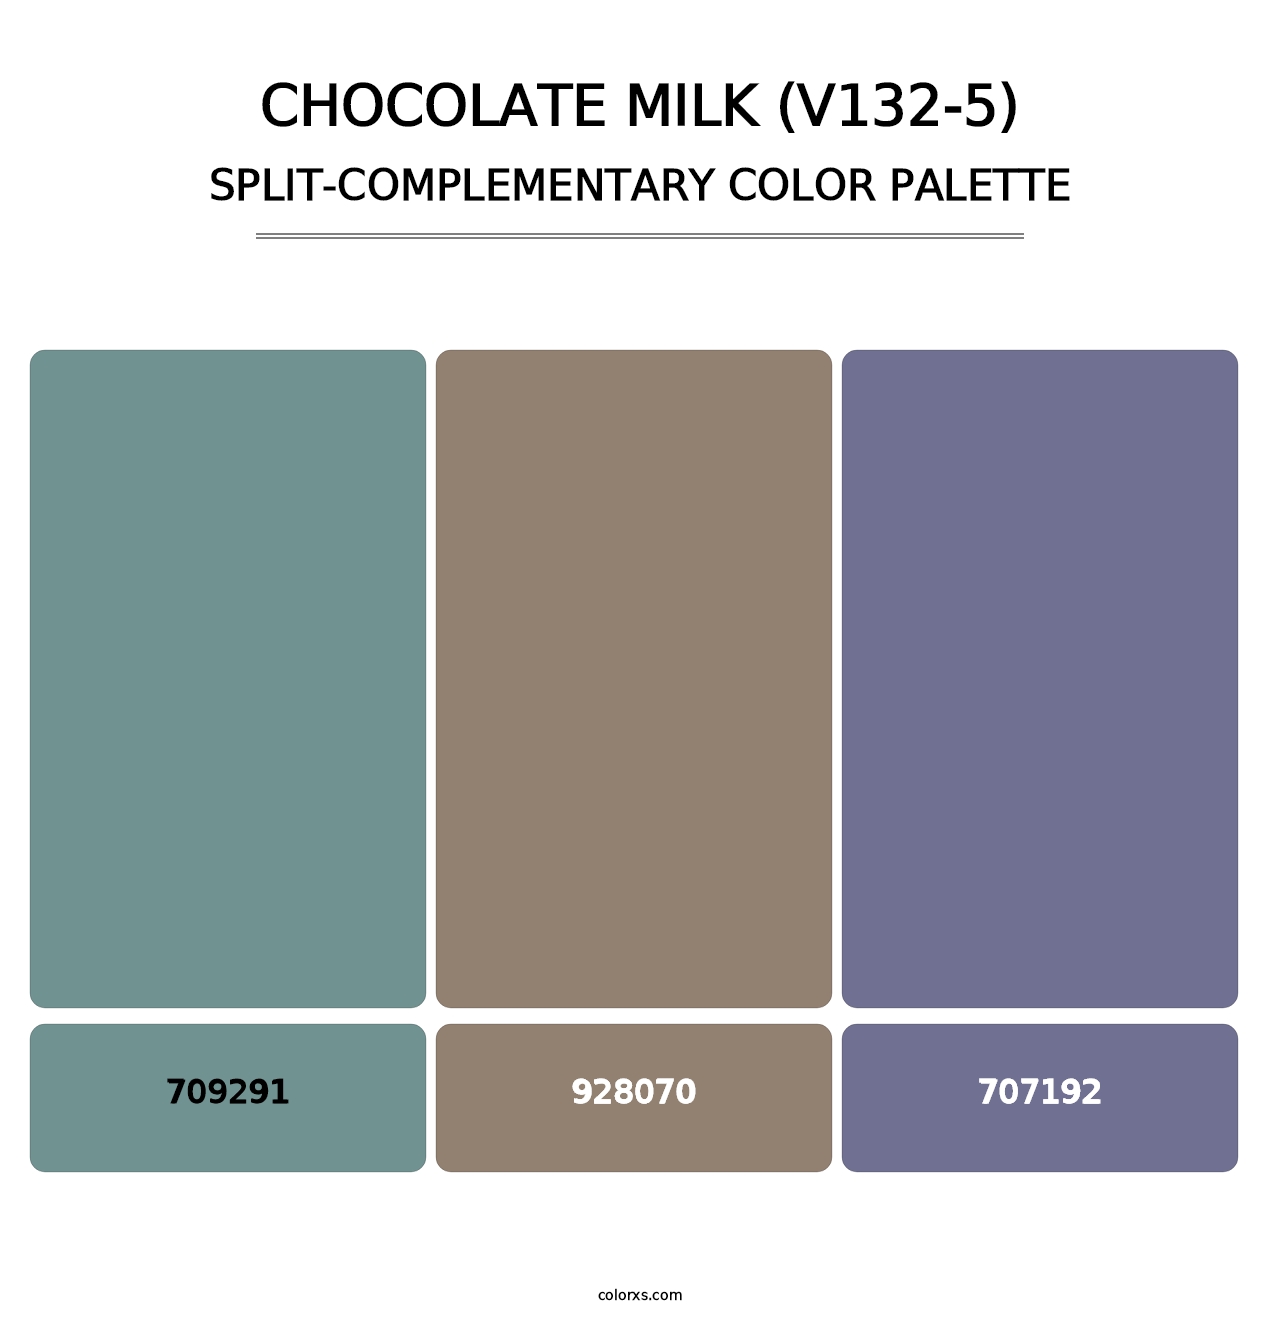 Chocolate Milk (V132-5) - Split-Complementary Color Palette